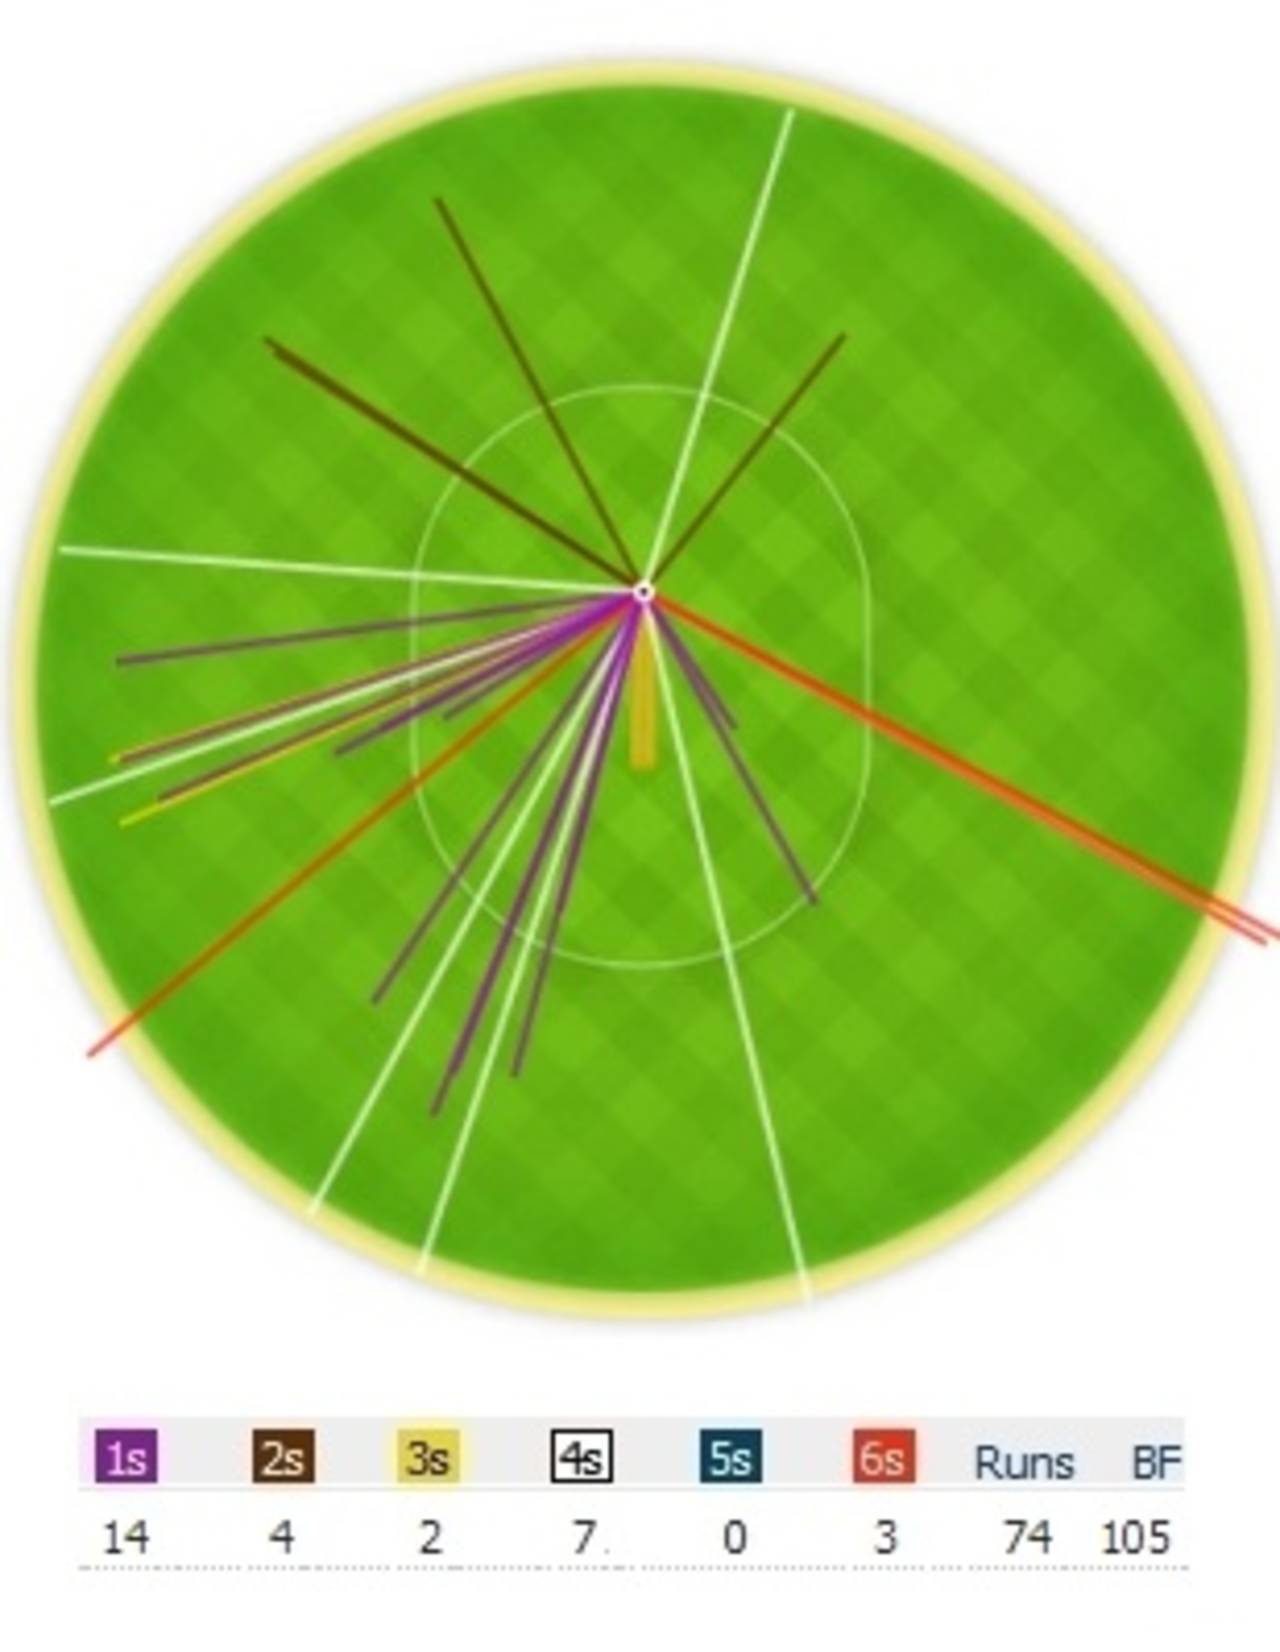 Wagon-wheel for Kevin Pietersen versus Pragyan Ojha, India v England, 2nd Test, 3rd day, November 25, 2012